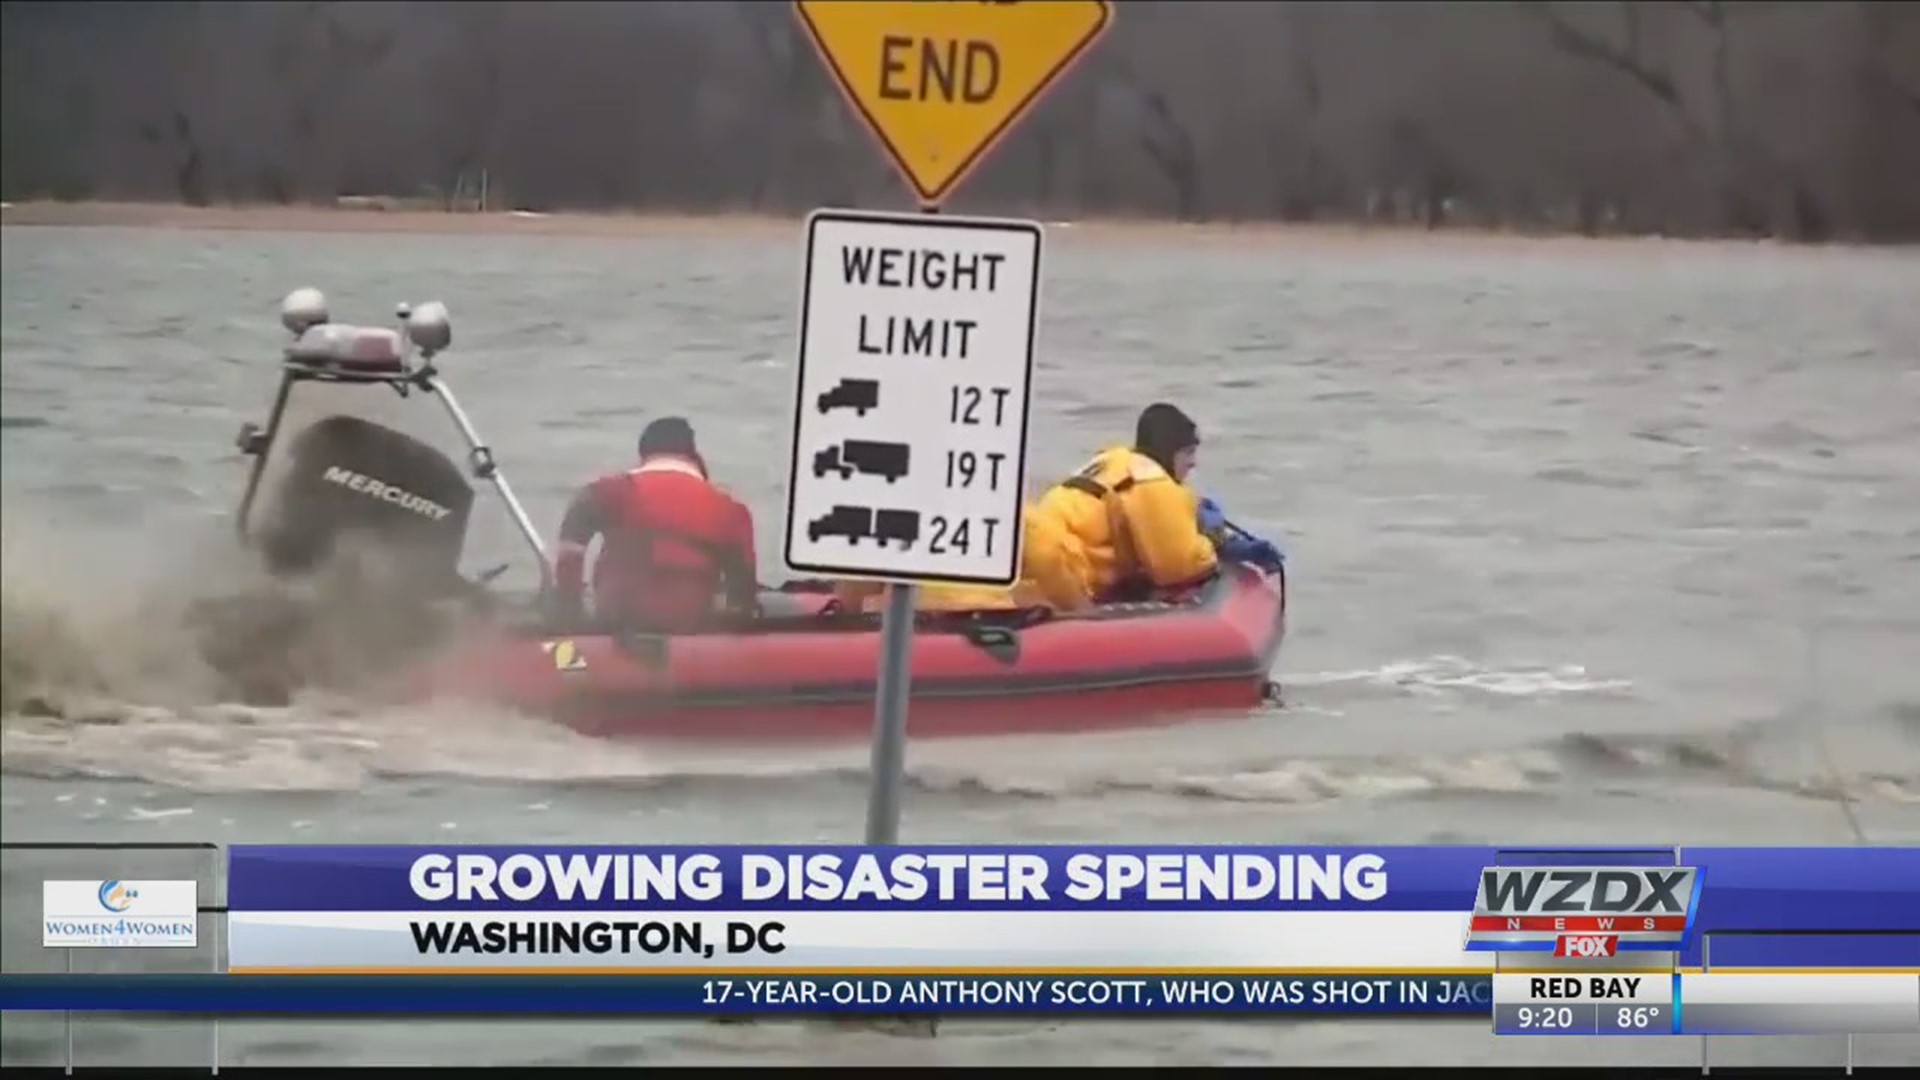 Growing disaster spending in Washington, D.C.